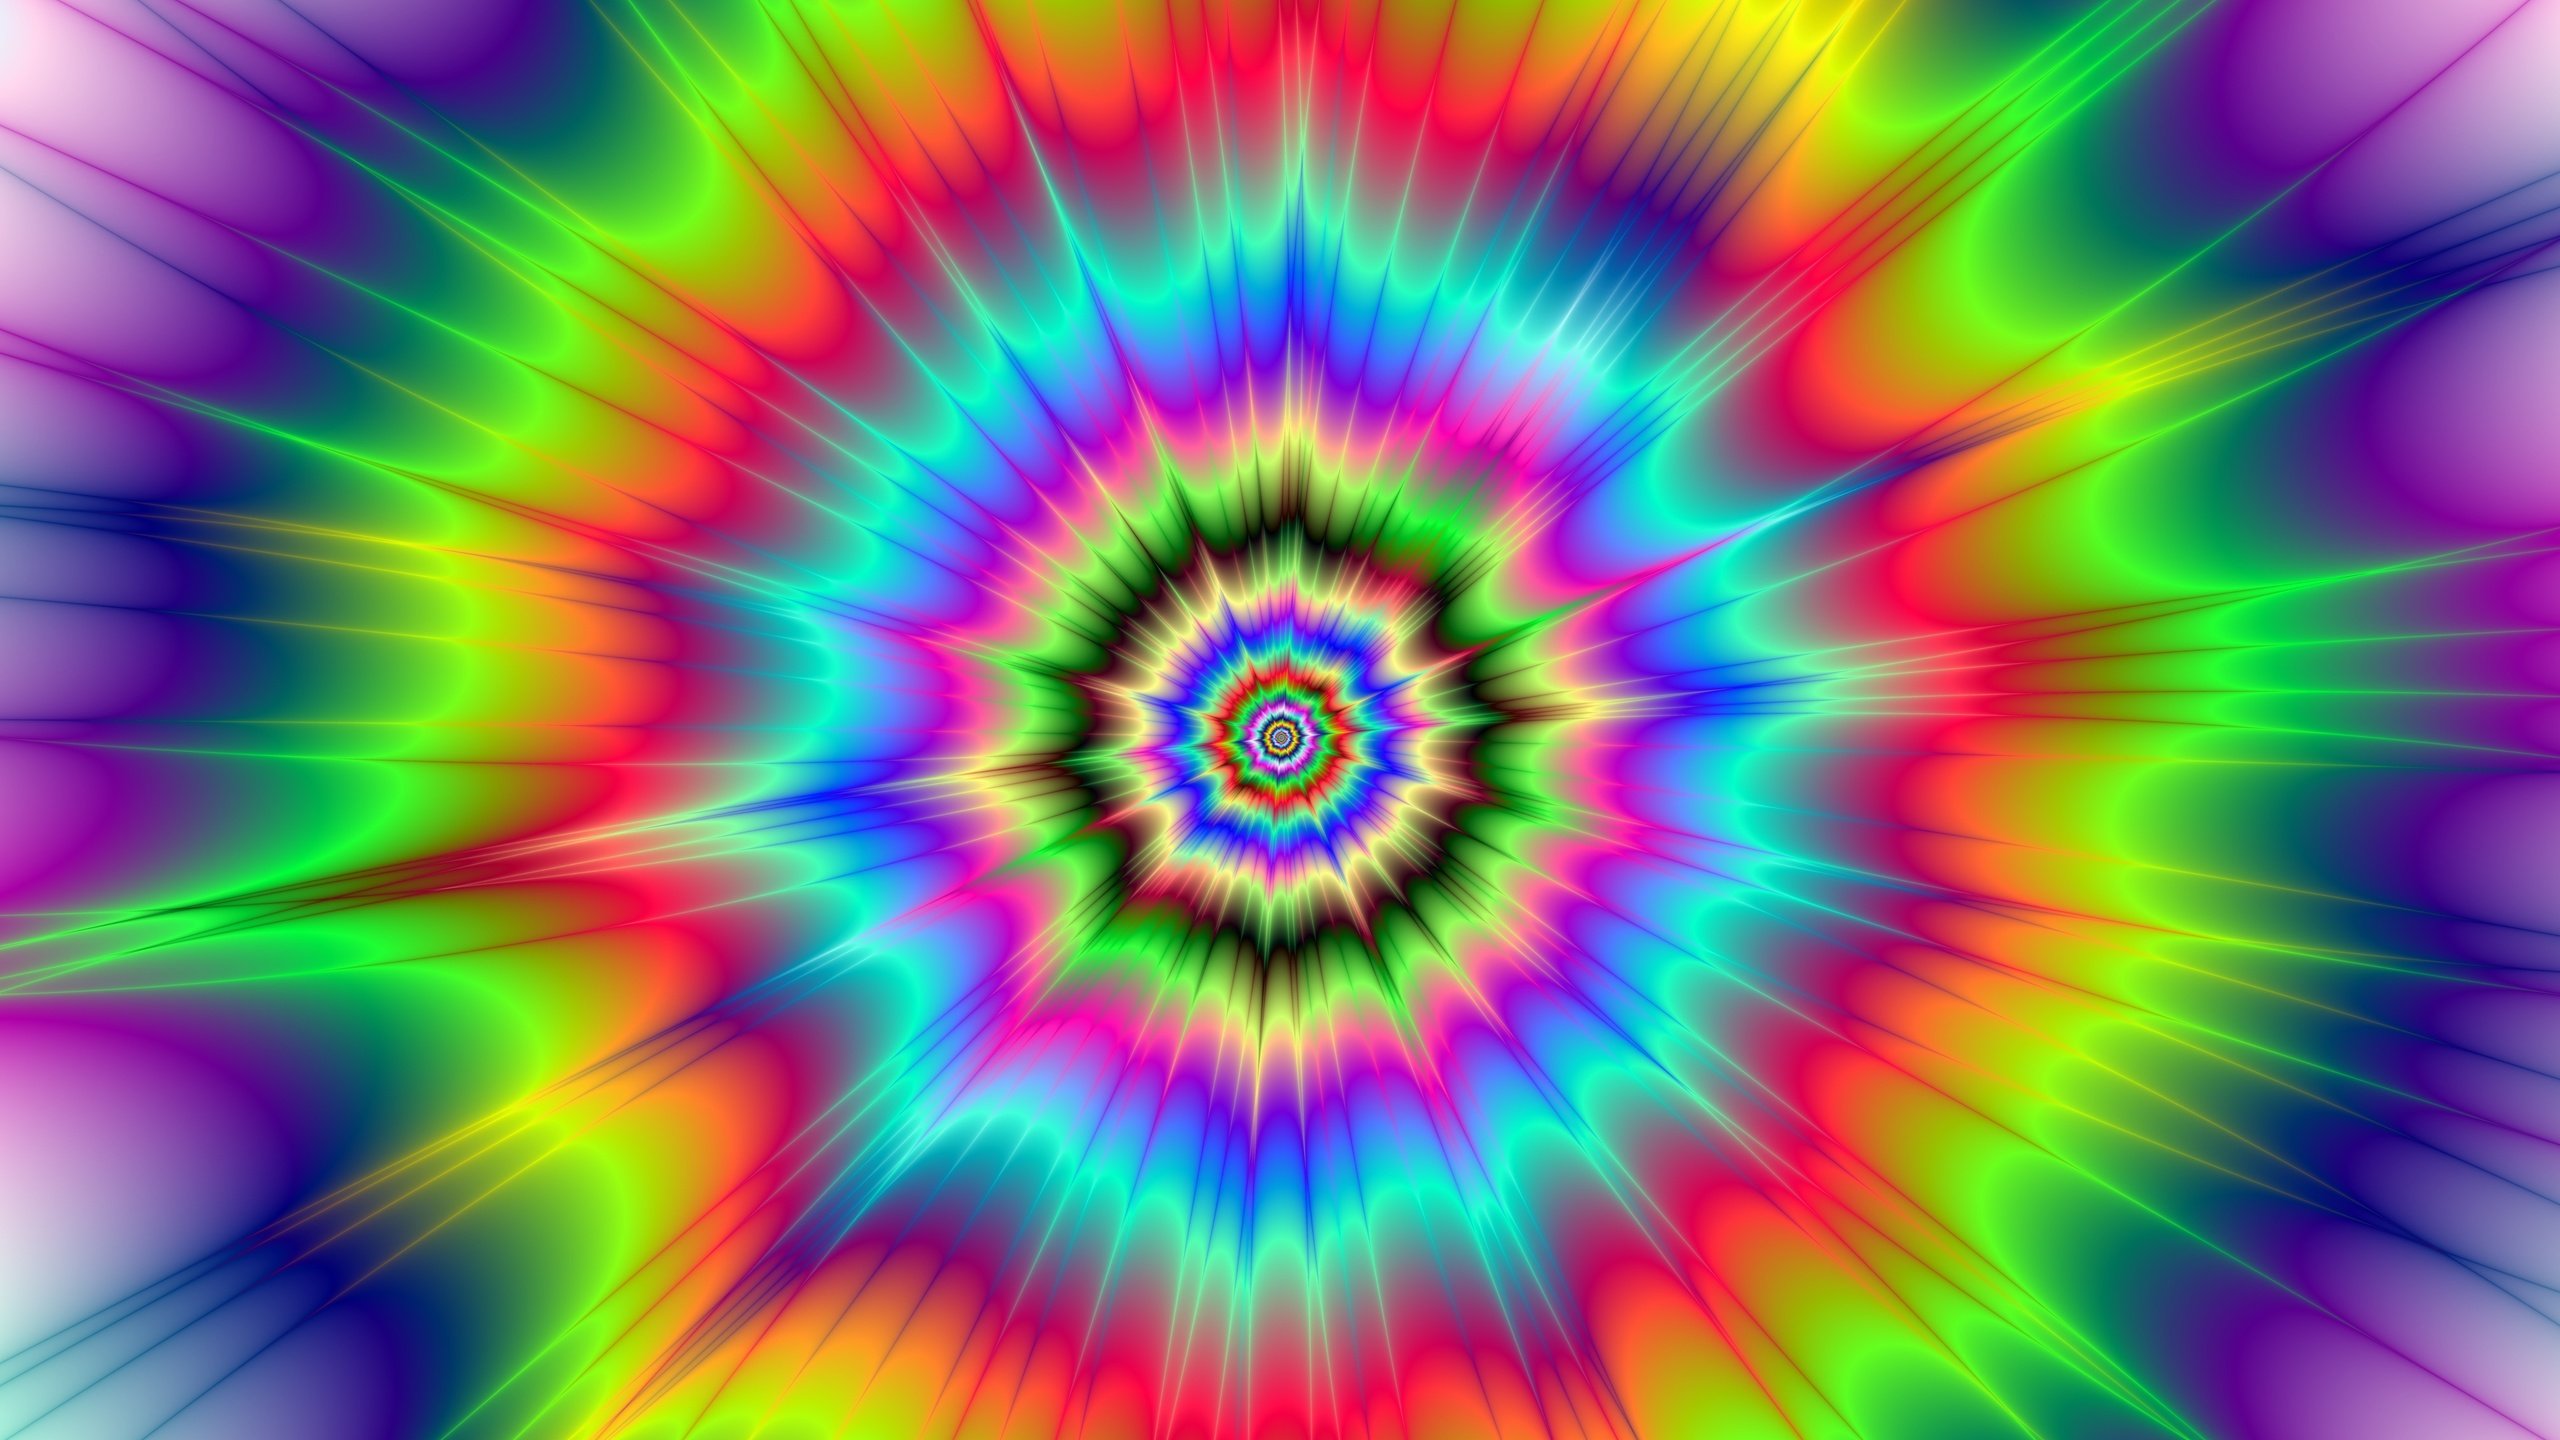 Обои 1 waitfor delay '0:0:15' --, абстракция, игра цвета, -1 or 2+404-404-1=0+0+0+1 --, -1 or 3+404-404-1=0+0+0+1 --, цвет, circular, -1 or 2+400-400-1=0+0+0+1, hypnotic, -1 or 3+400-400-1=0+0+0+1, круги, визуальный эффект, -1' or 2+42-42-1=0+0+0+1 --, -1' or 3+42-42-1=0+0+0+1 --, 1, if(now()=sysdate(), -1' or 2+305-305-1=0+0+0+1 or 'enu5ymq1'=', яркие цвета, 0), -1' or 3+305-305-1=0+0+0+1 or 'enu5ymq1'=', 0'xor(if(now()=sysdate(), -1" or 2+277-277-1=0+0+0+1 --, иллюзия, 0))xor'z, -1" or 3+277-277-1=0+0+0+1 --, 0"xor(if(now()=sysdate(), 0))xor"z, 9bxsfqzt'; waitfor delay '0:0:15' --, гипноз, sleep(15), -5 or 170=(select 170 from pg_sleep(15))--, (select(0)from(select(sleep(15)))v)/*'+(select(0)from(select(sleep(15)))v)+'"+(select(0)from(select(sleep(15)))v)+"*/, -5) or 669=(select 669 from pg_sleep(15))--, сочные цвета, -1; waitfor delay '0:0:15' --, галлюцинации, -1); waitfor delay '0:0:15' --, abstraction, the game of color, color, circles, visual effect, bright colors, illusion, hypnosis, hallucinations разрешение 4600x4600 Загрузить